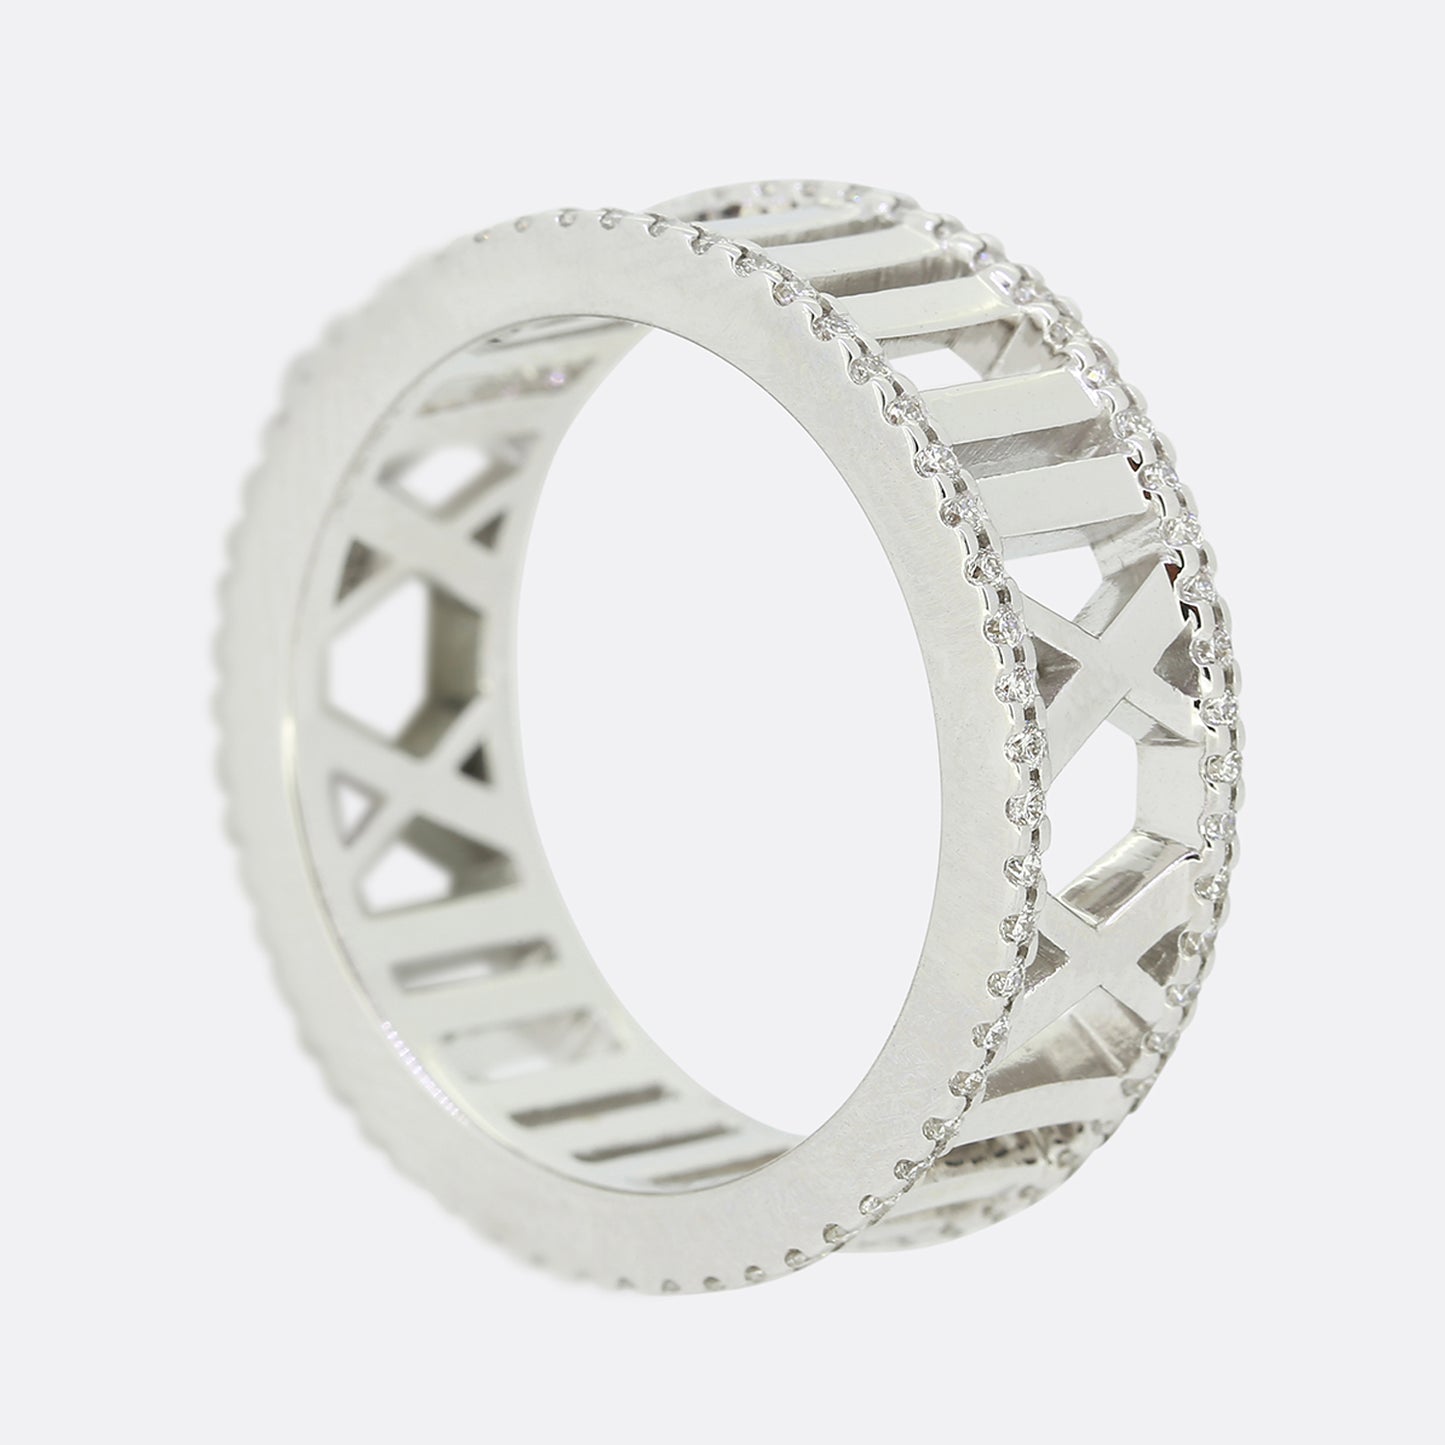 Tiffany & Co. Diamond Atlas Ring Size M (53)